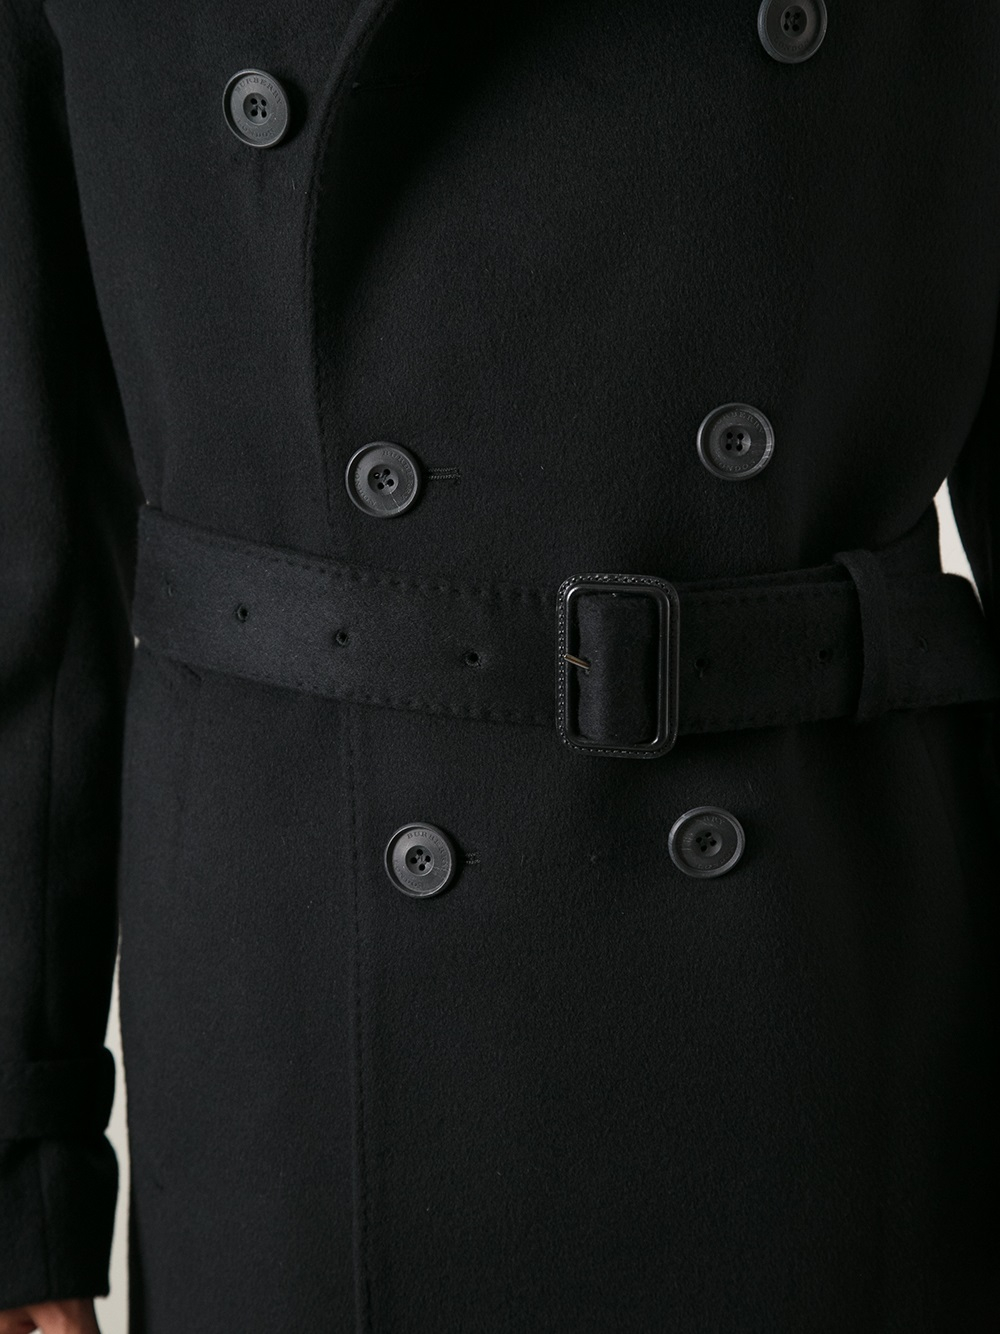 Introducir 48+ imagen burberry britton trench coat review - Abzlocal.mx